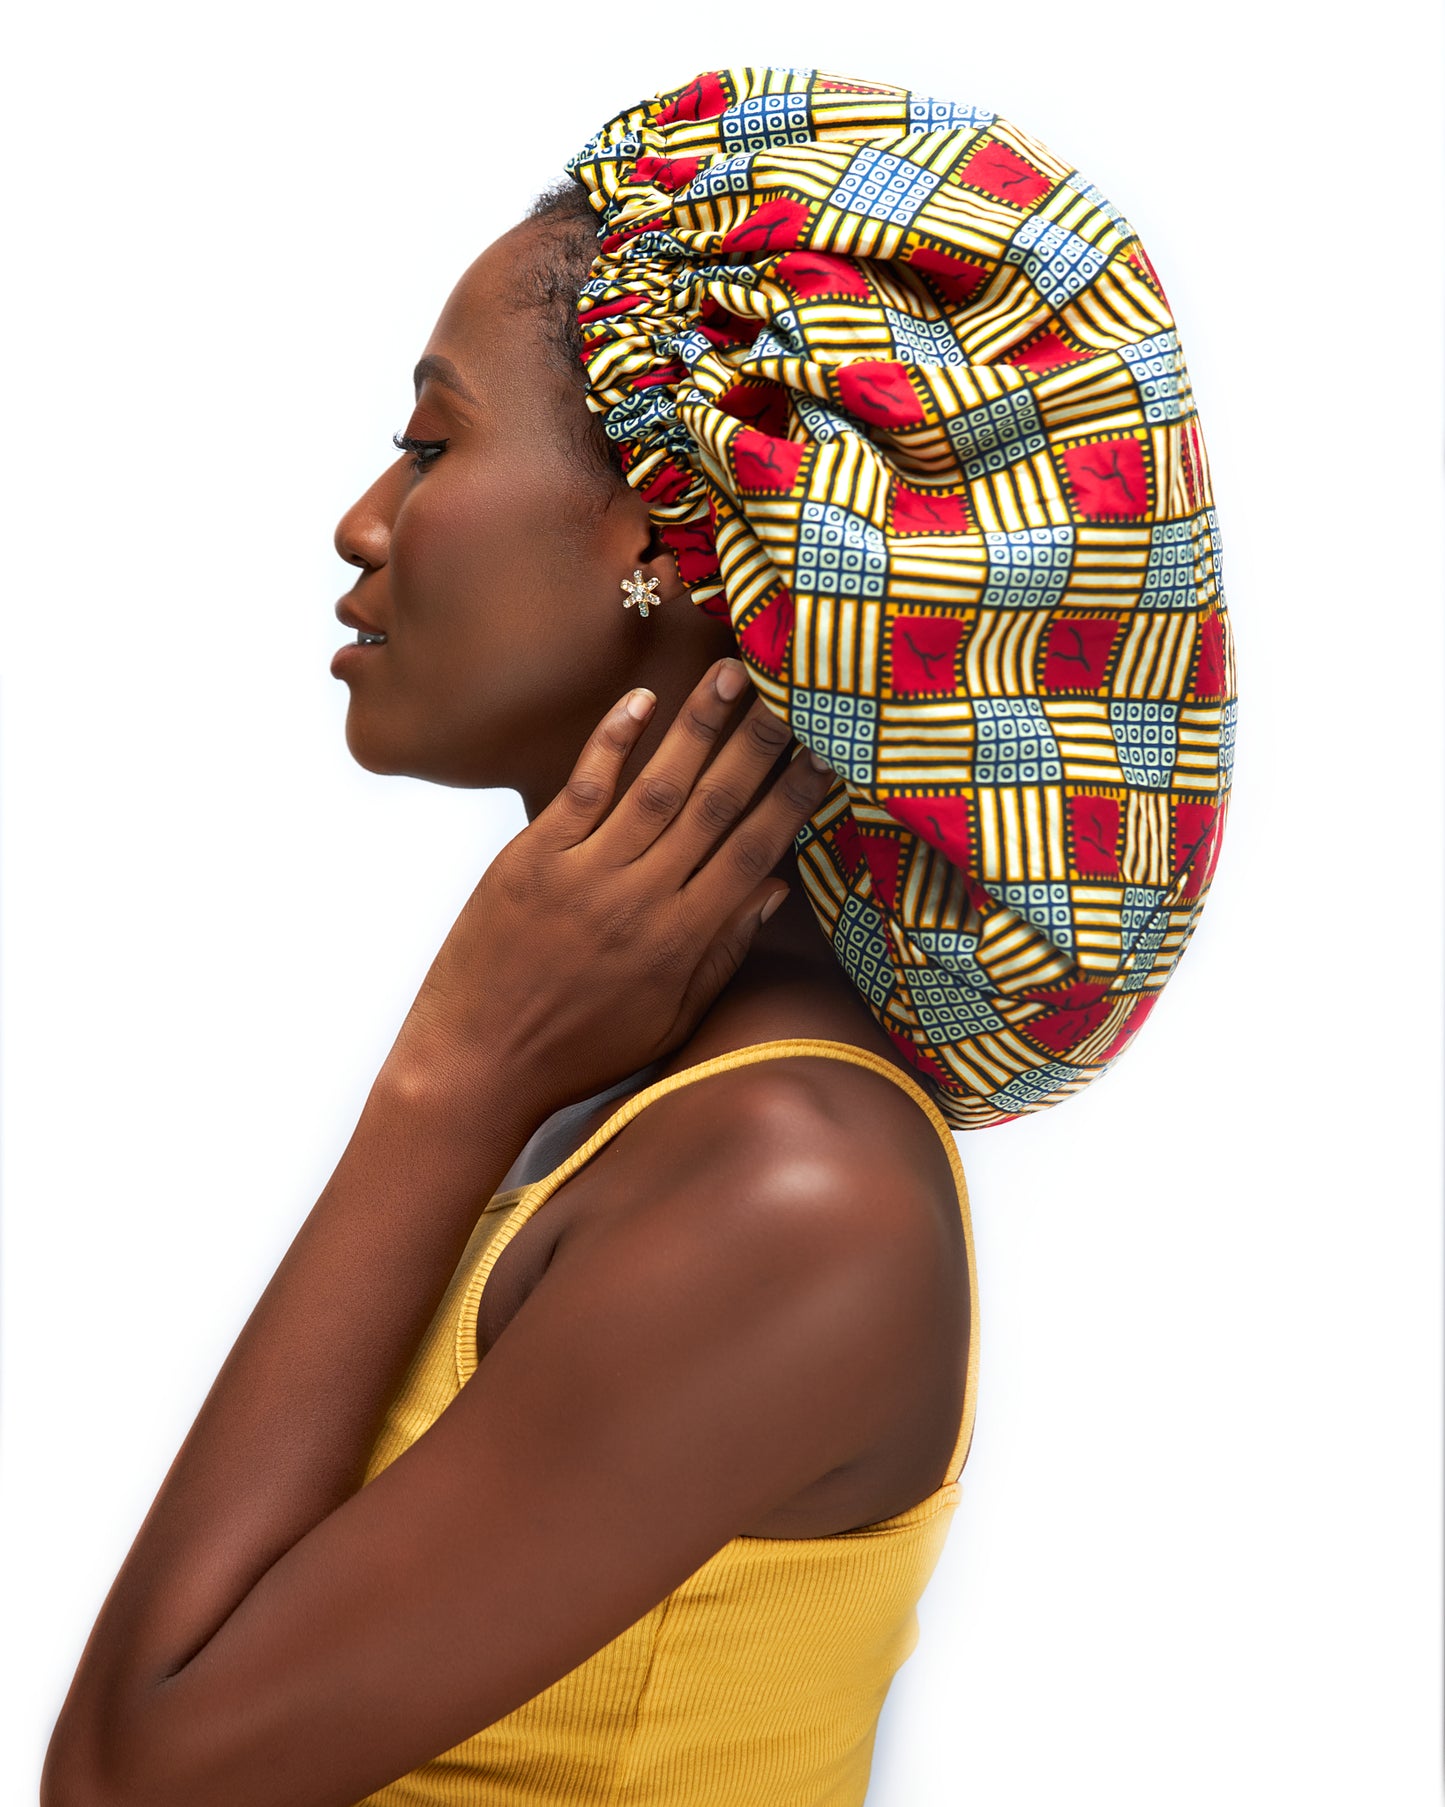 Gold, Red, Cream, Black , And Blue Mix Pattern Design Ankara Wax Print With Black Silk Lined Hair Bonnet